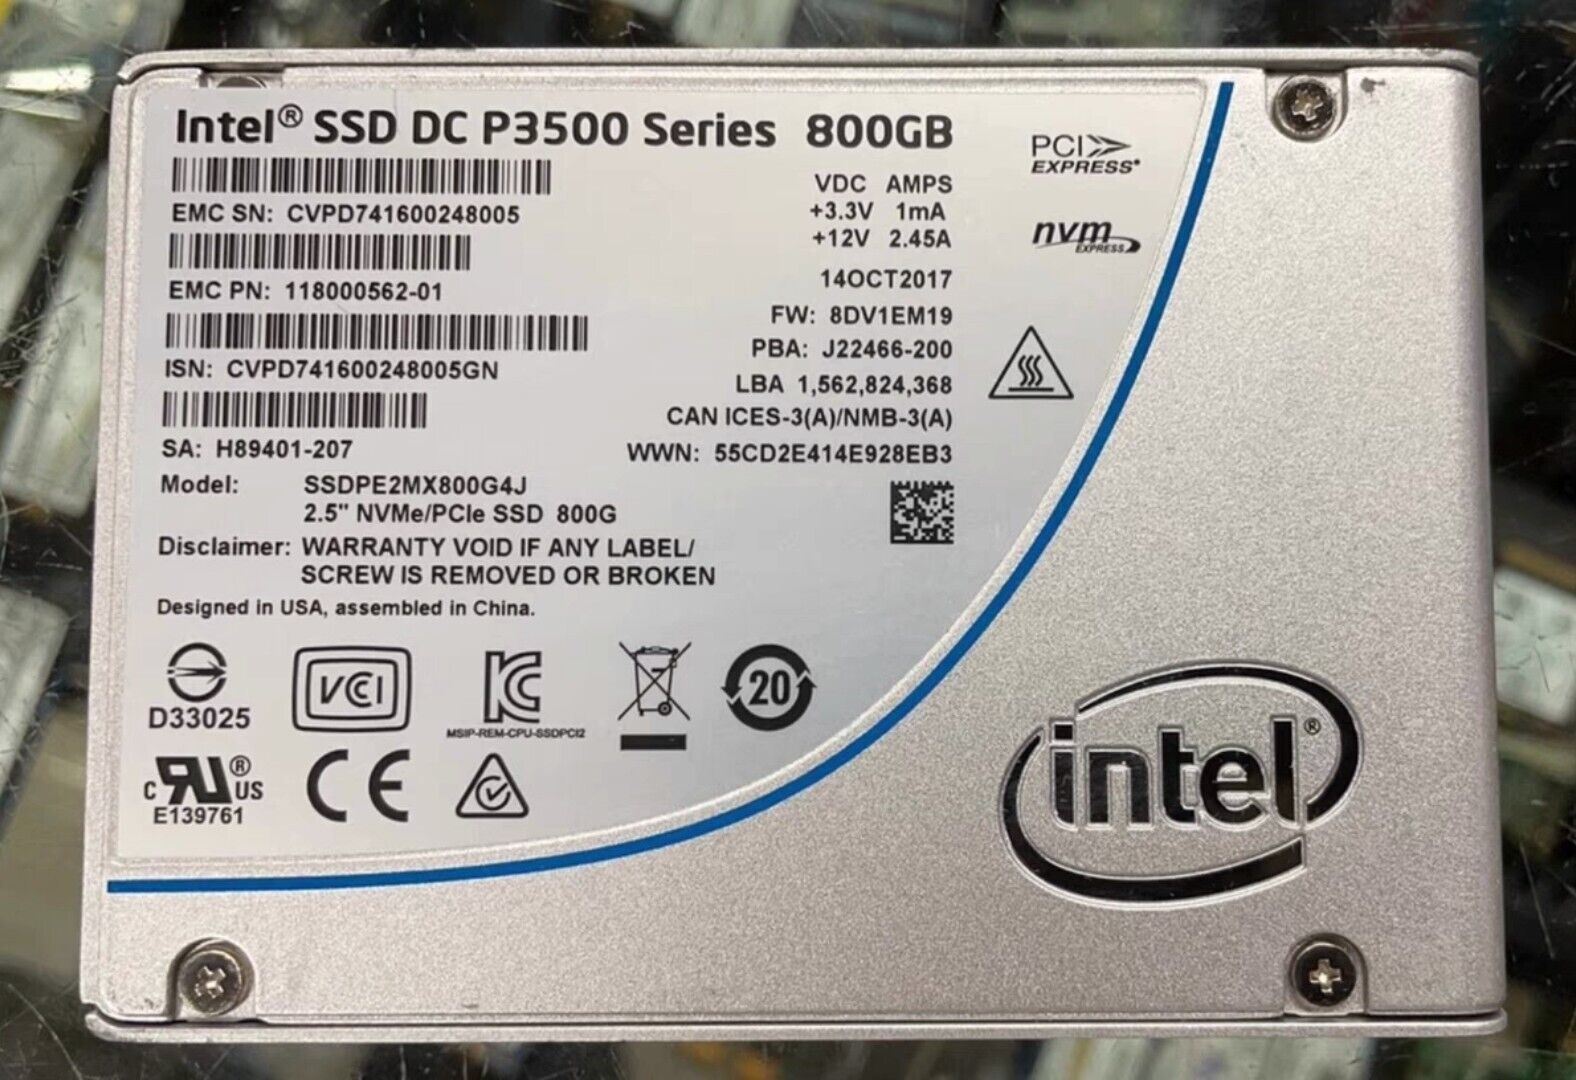 Intel SSD DC P3500 Series 800GB SSDPE2MX800G4J 2.5\'\'NVMe/PCIe Solid State Drive